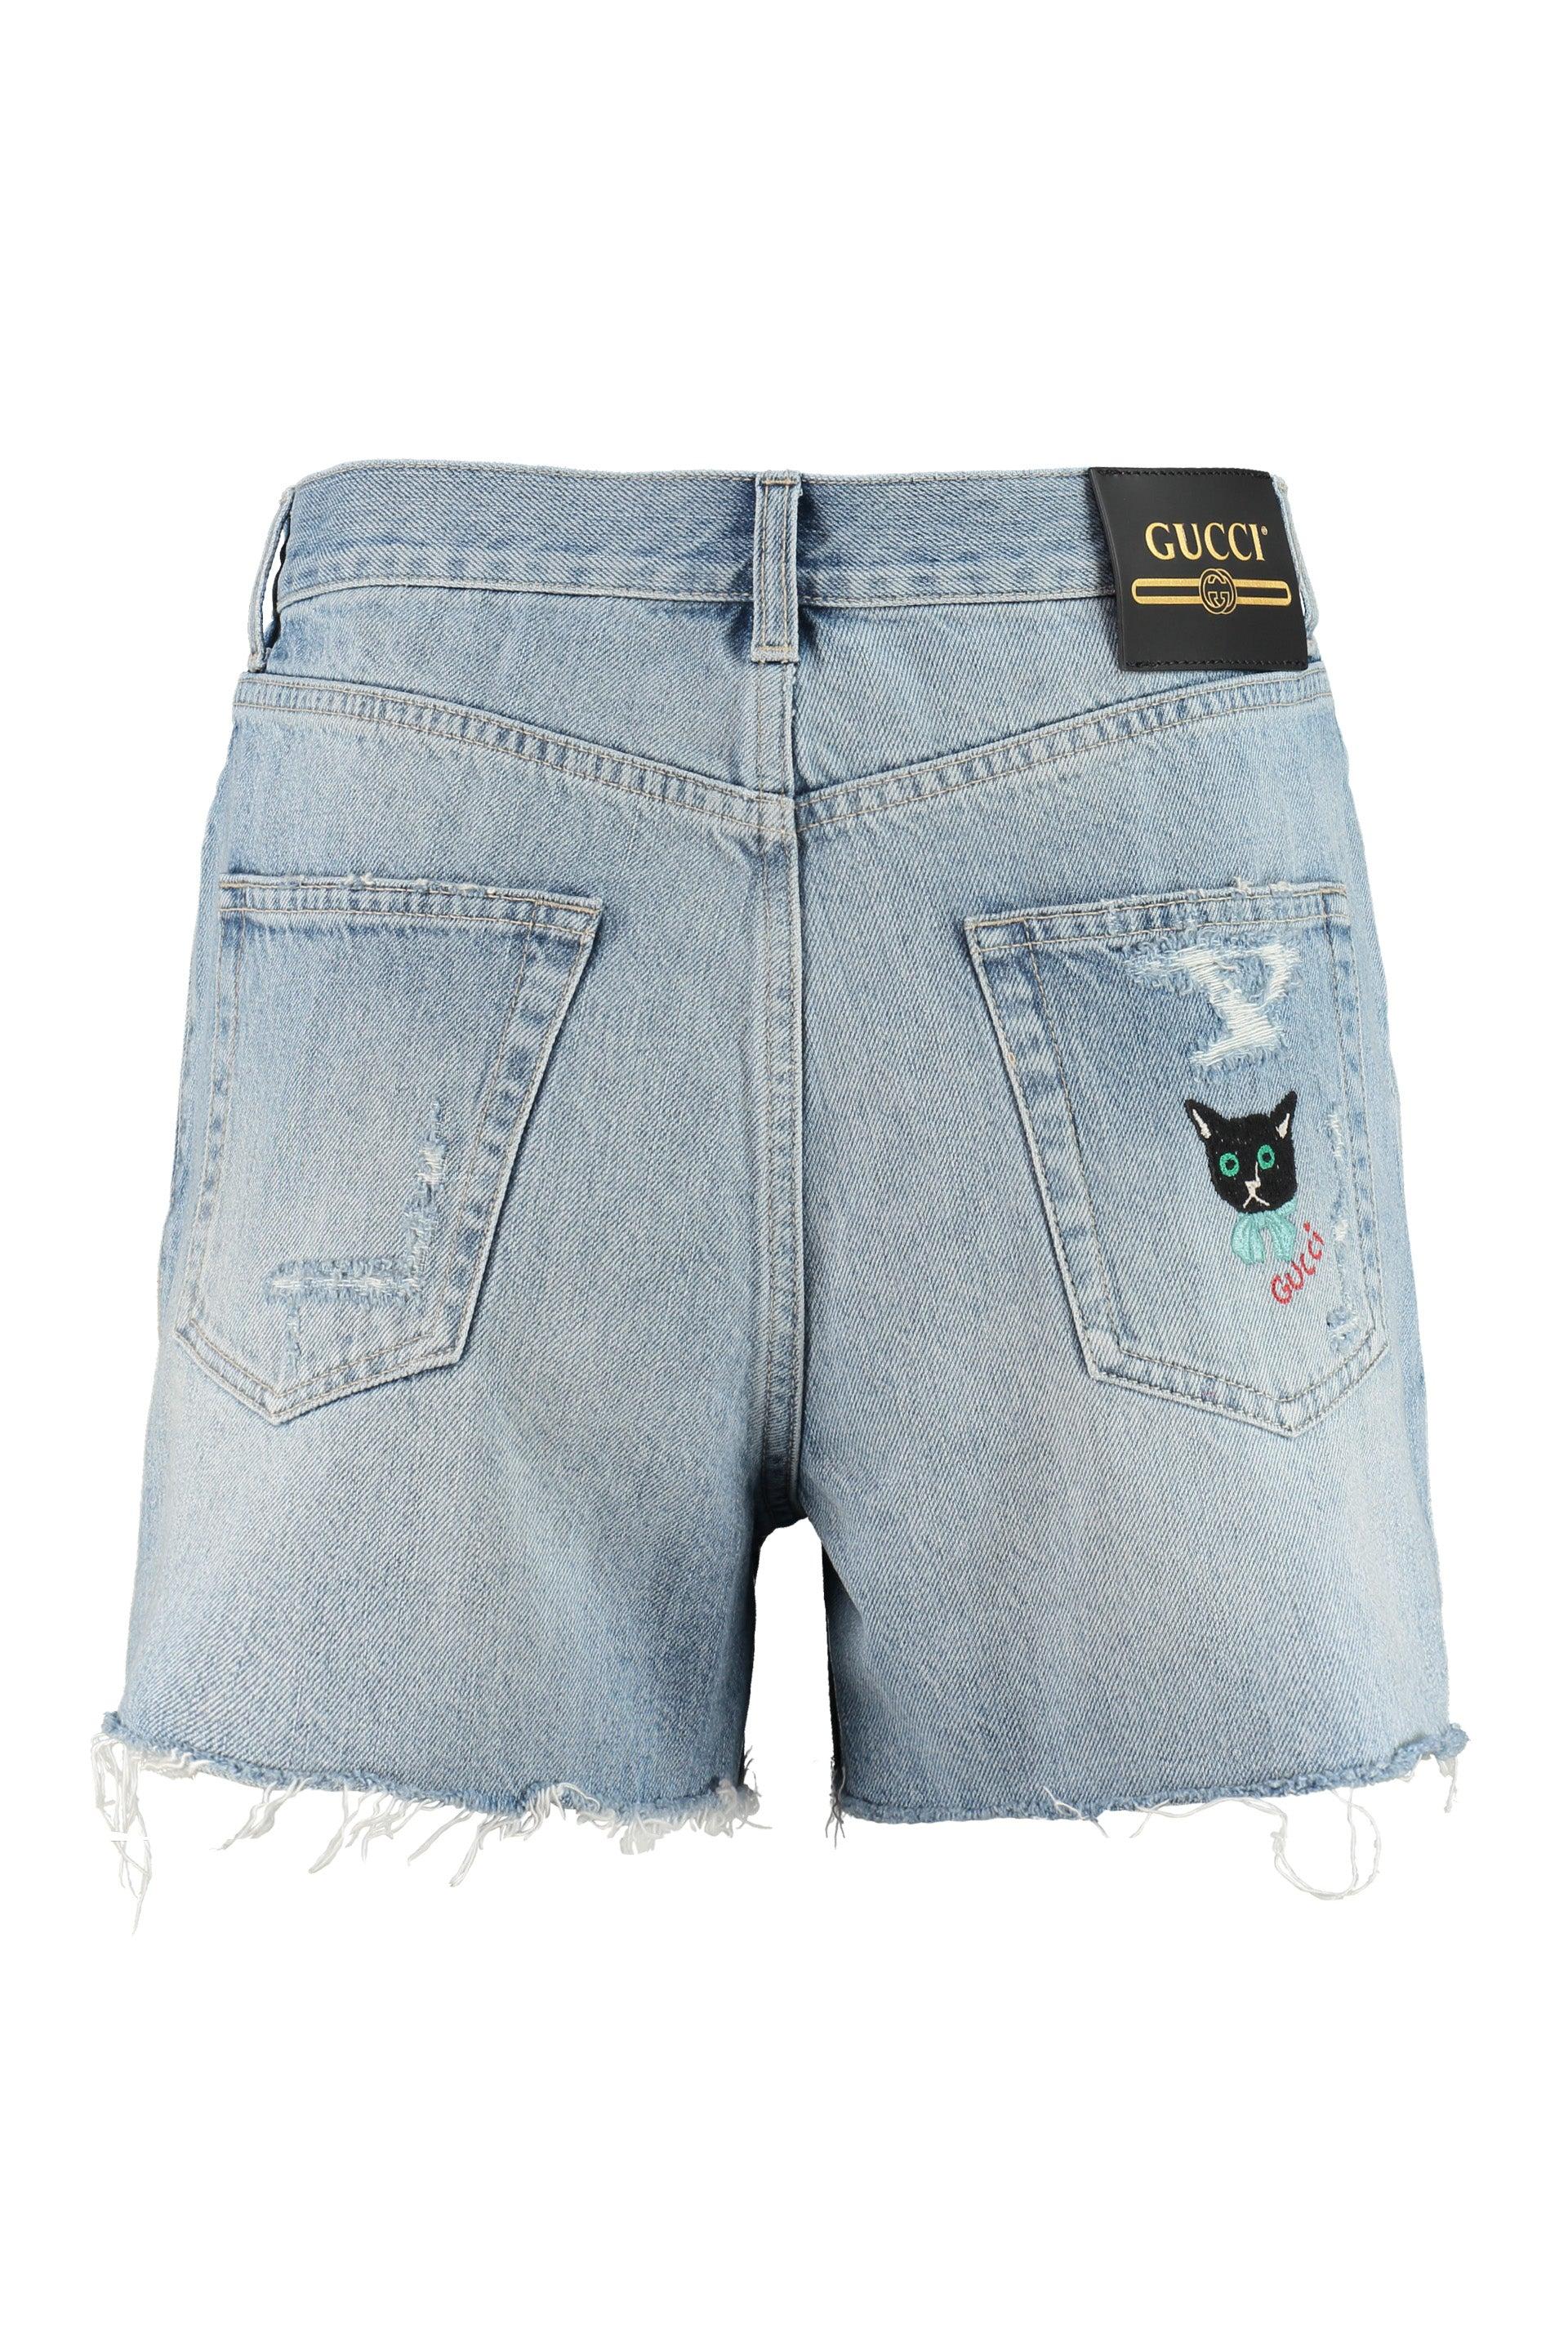 Gucci Cut-off Denim Shorts in Blue | Lyst